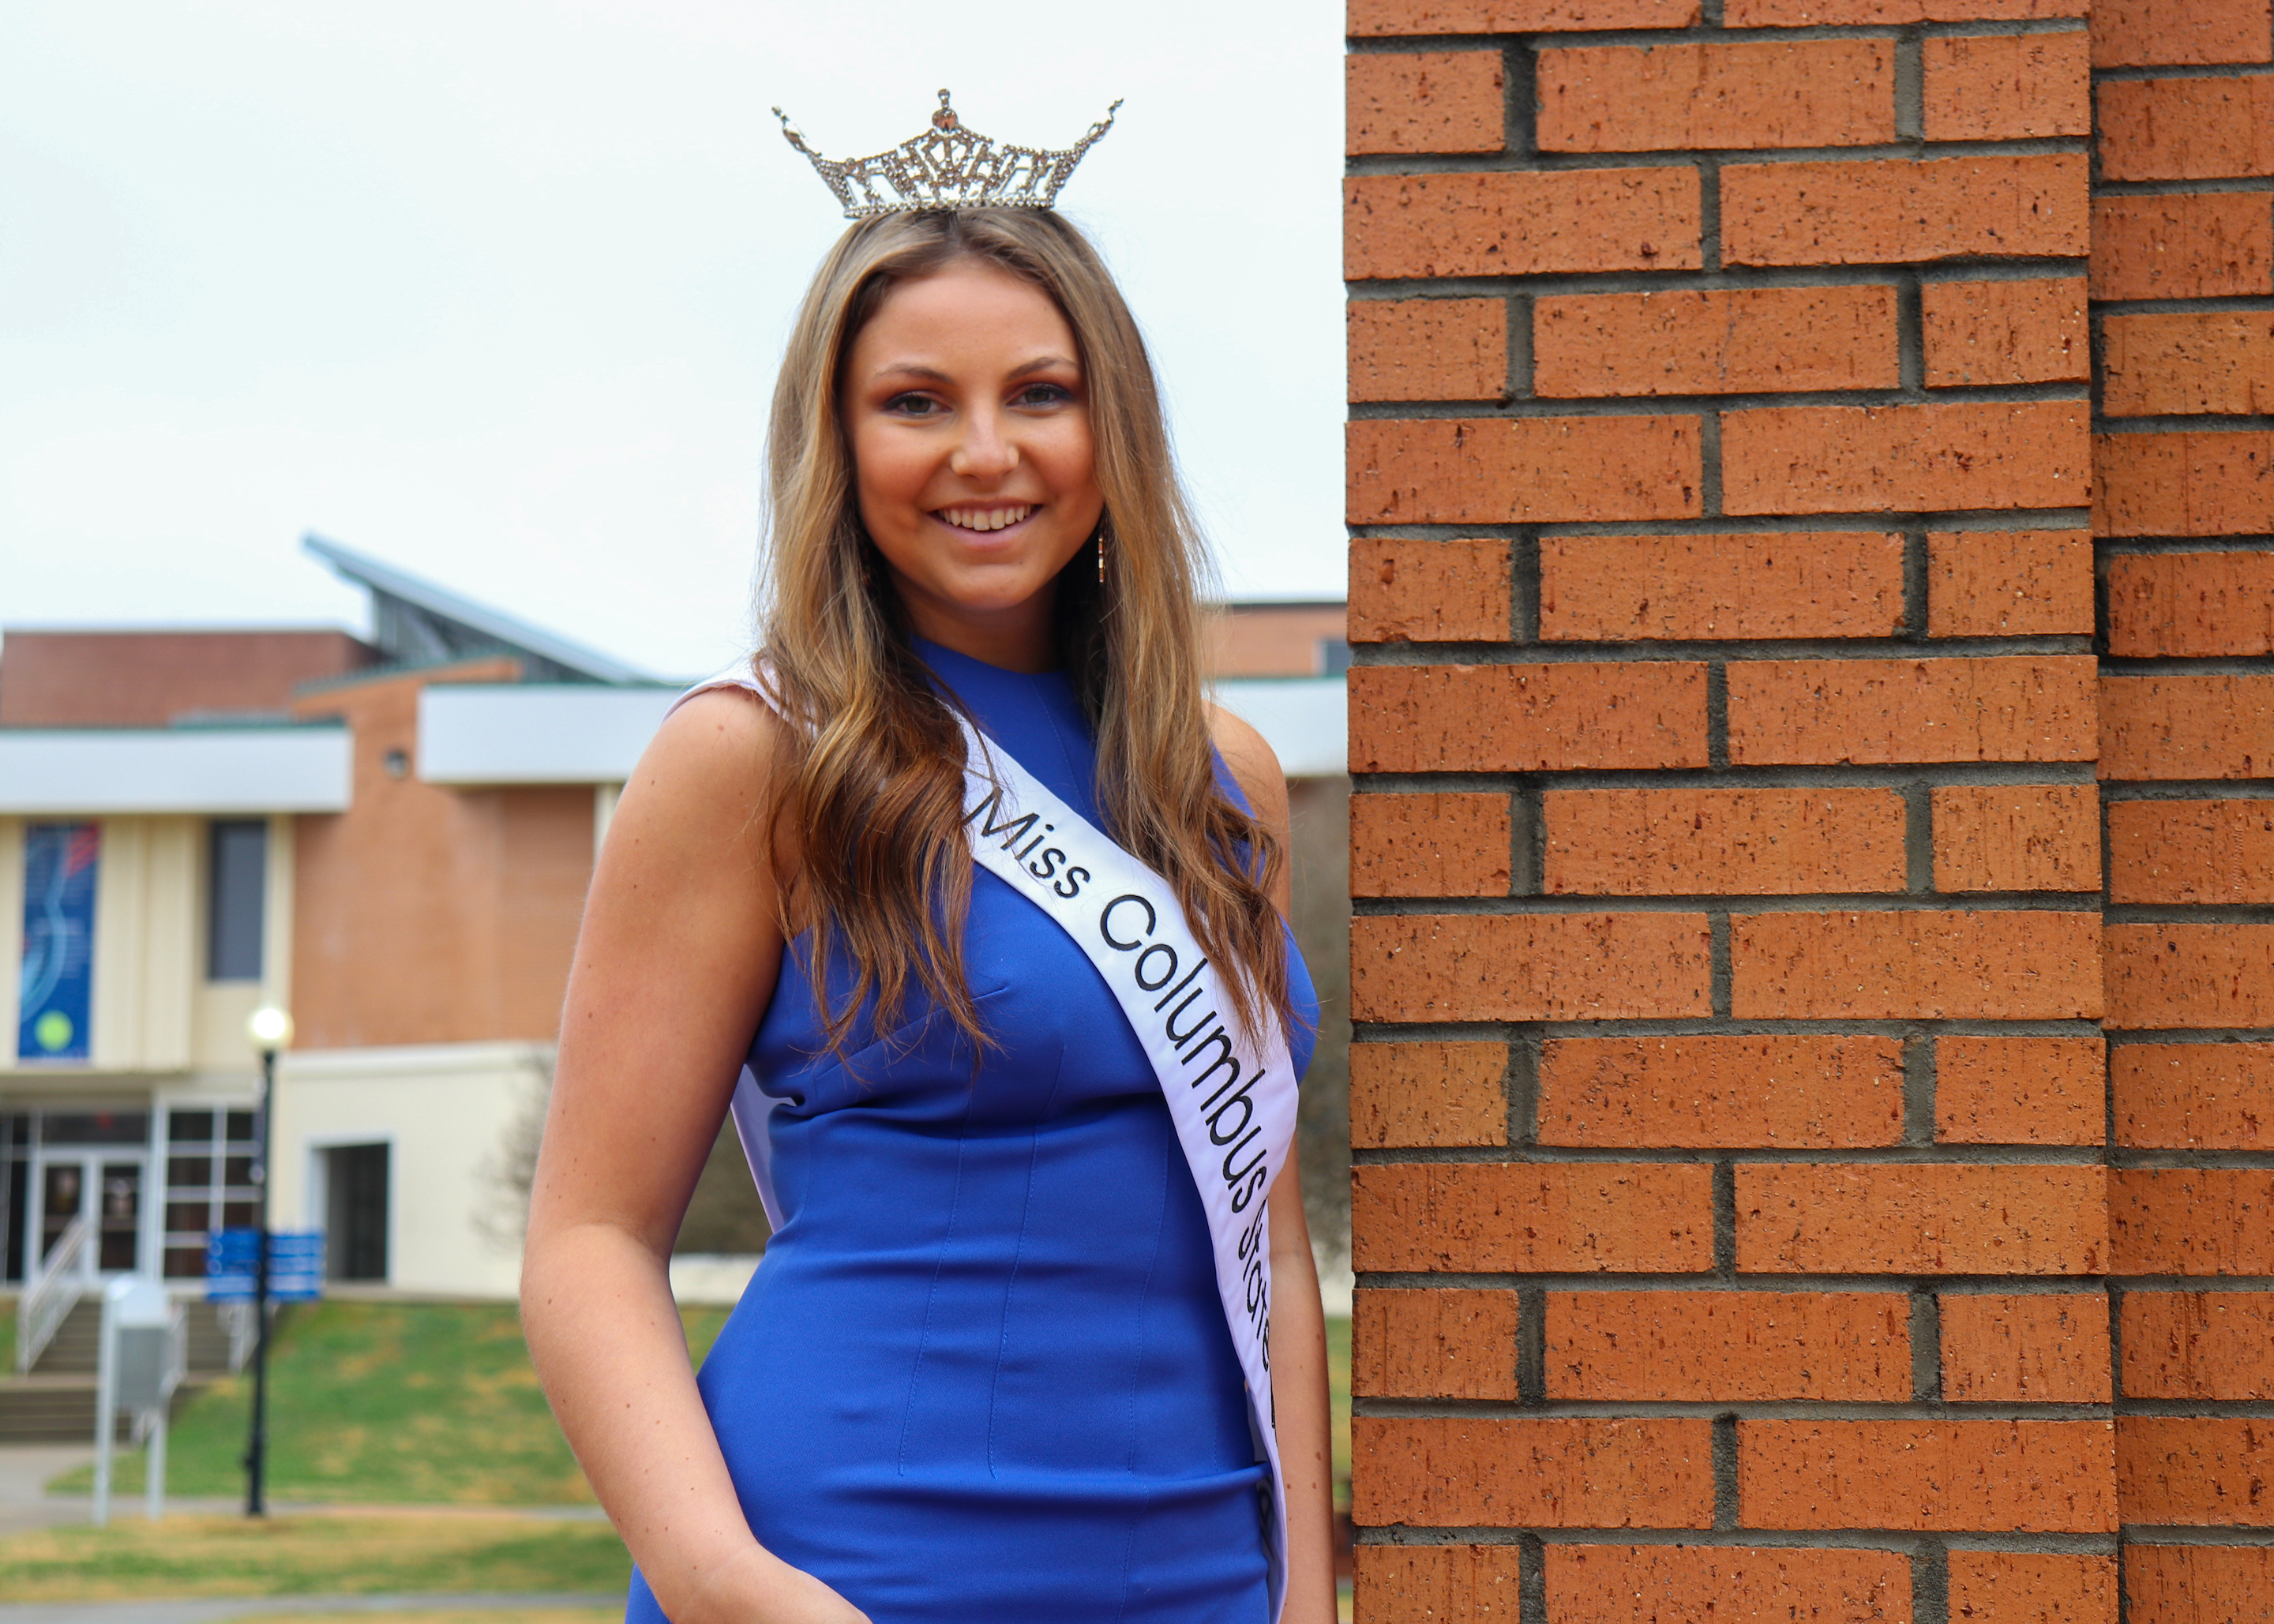 Miss CSU 2022 Tori Svenson in blue dress, crown and sash stands next to brick wall at clocktower with Davidson center behind her.